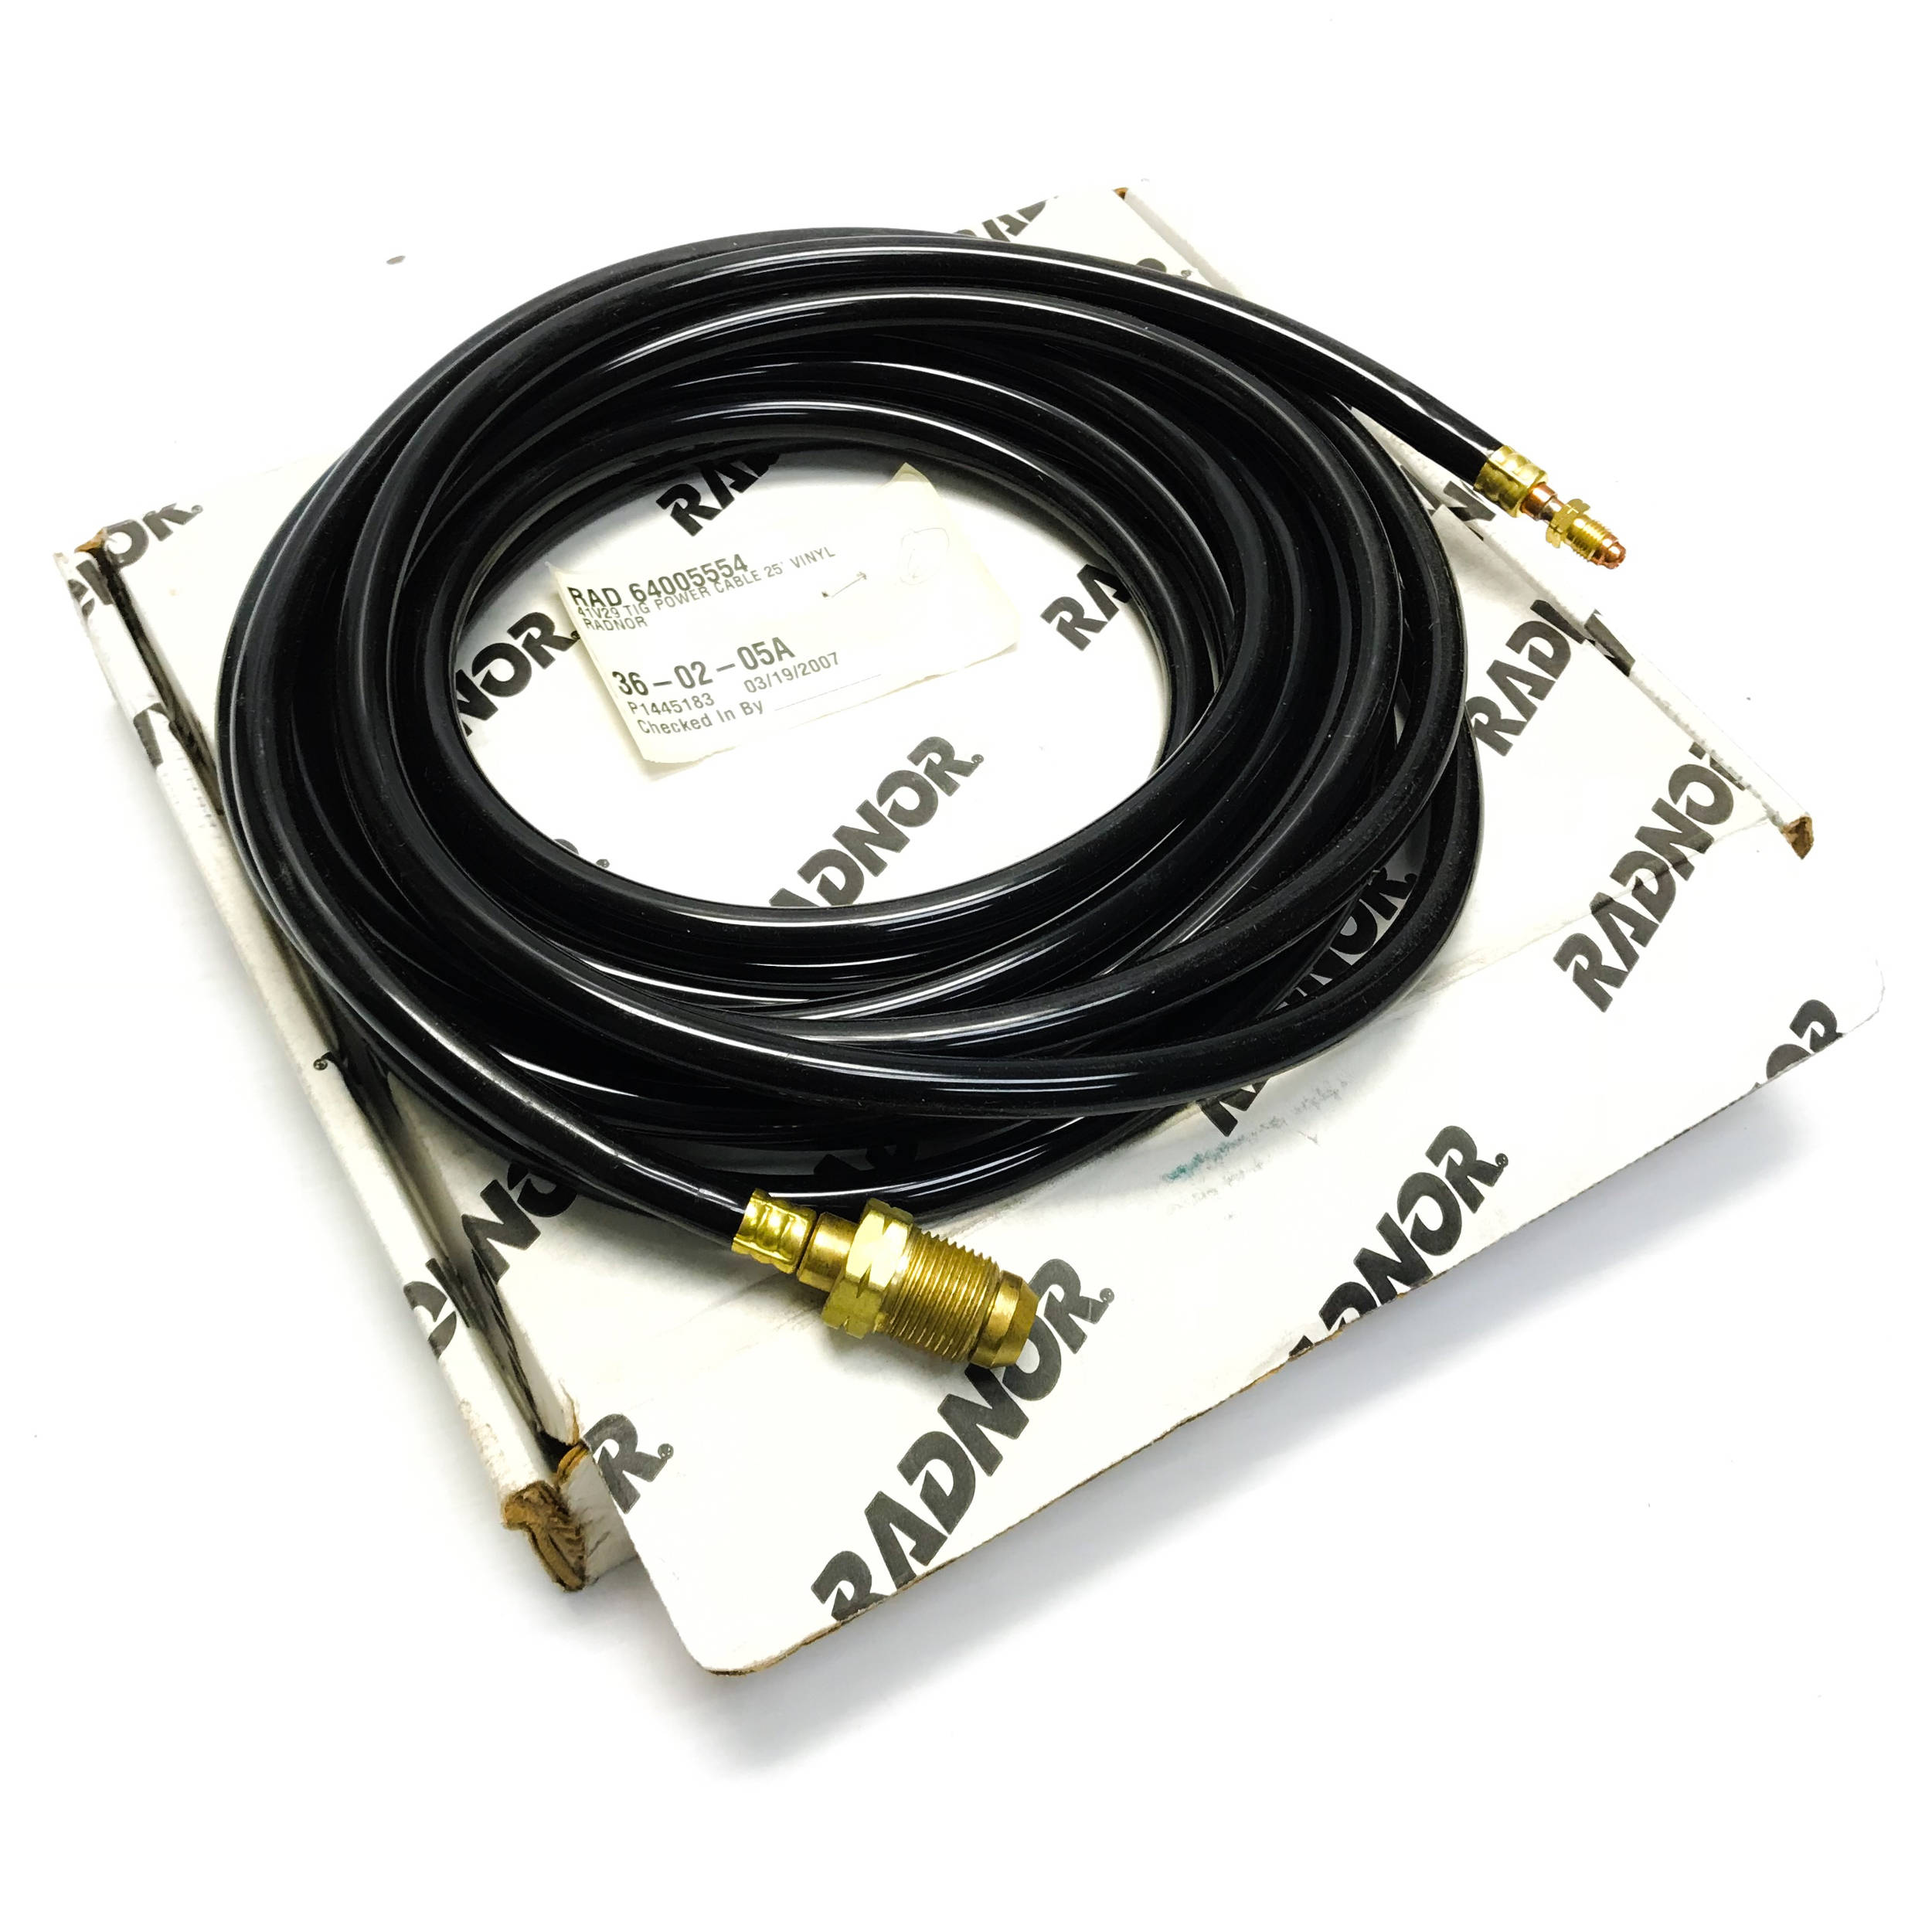 Radnor 41V29 25' Vinyl Power Cable